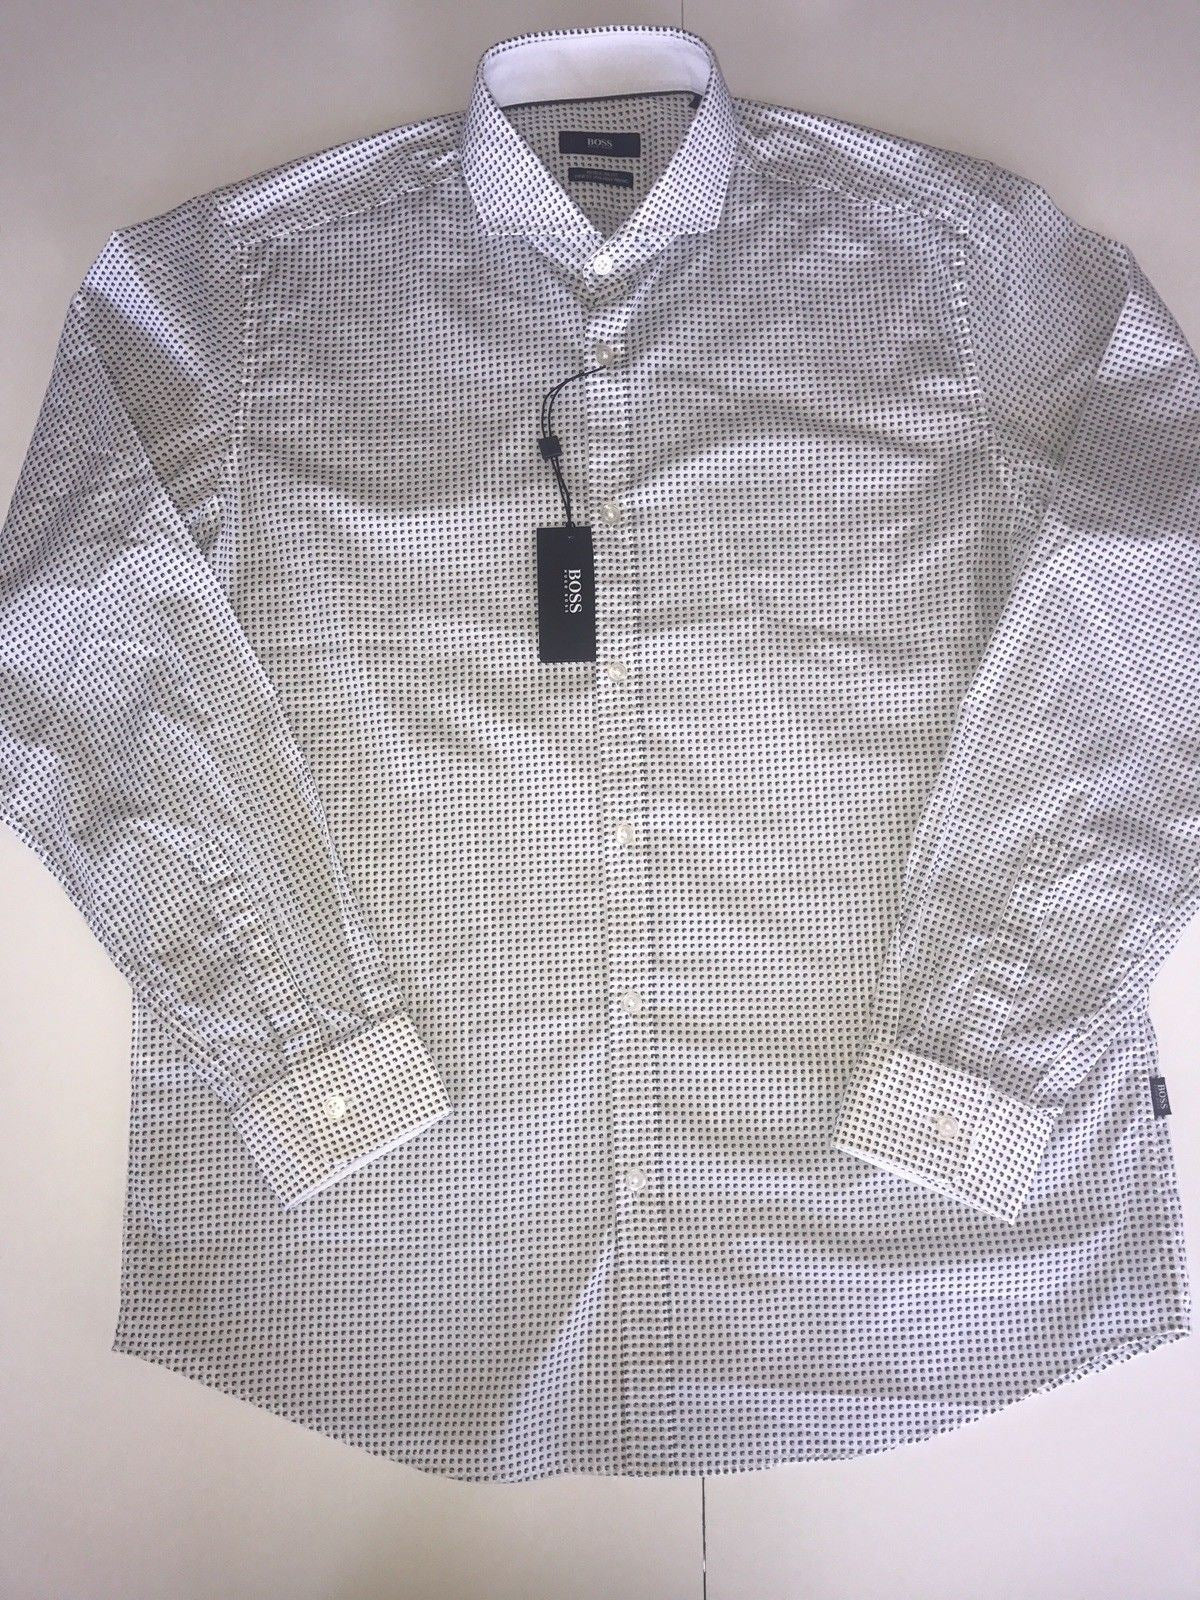 NWT $165 Hugo Boss Mens Regular Fit Dress Shirt Large Lennie_2